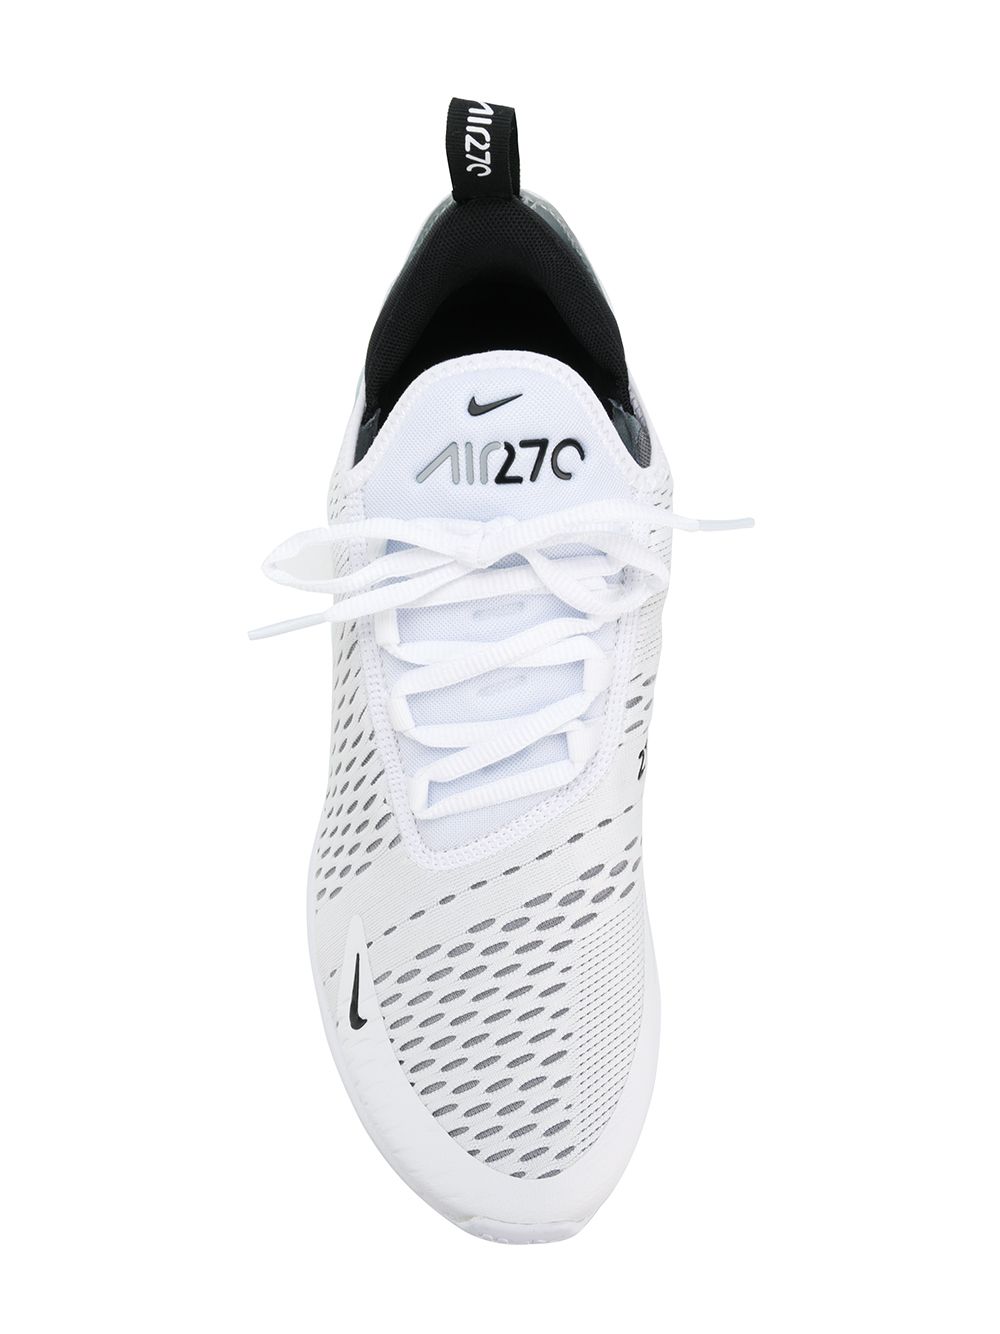 Giày Nike Air Max 270 White Black